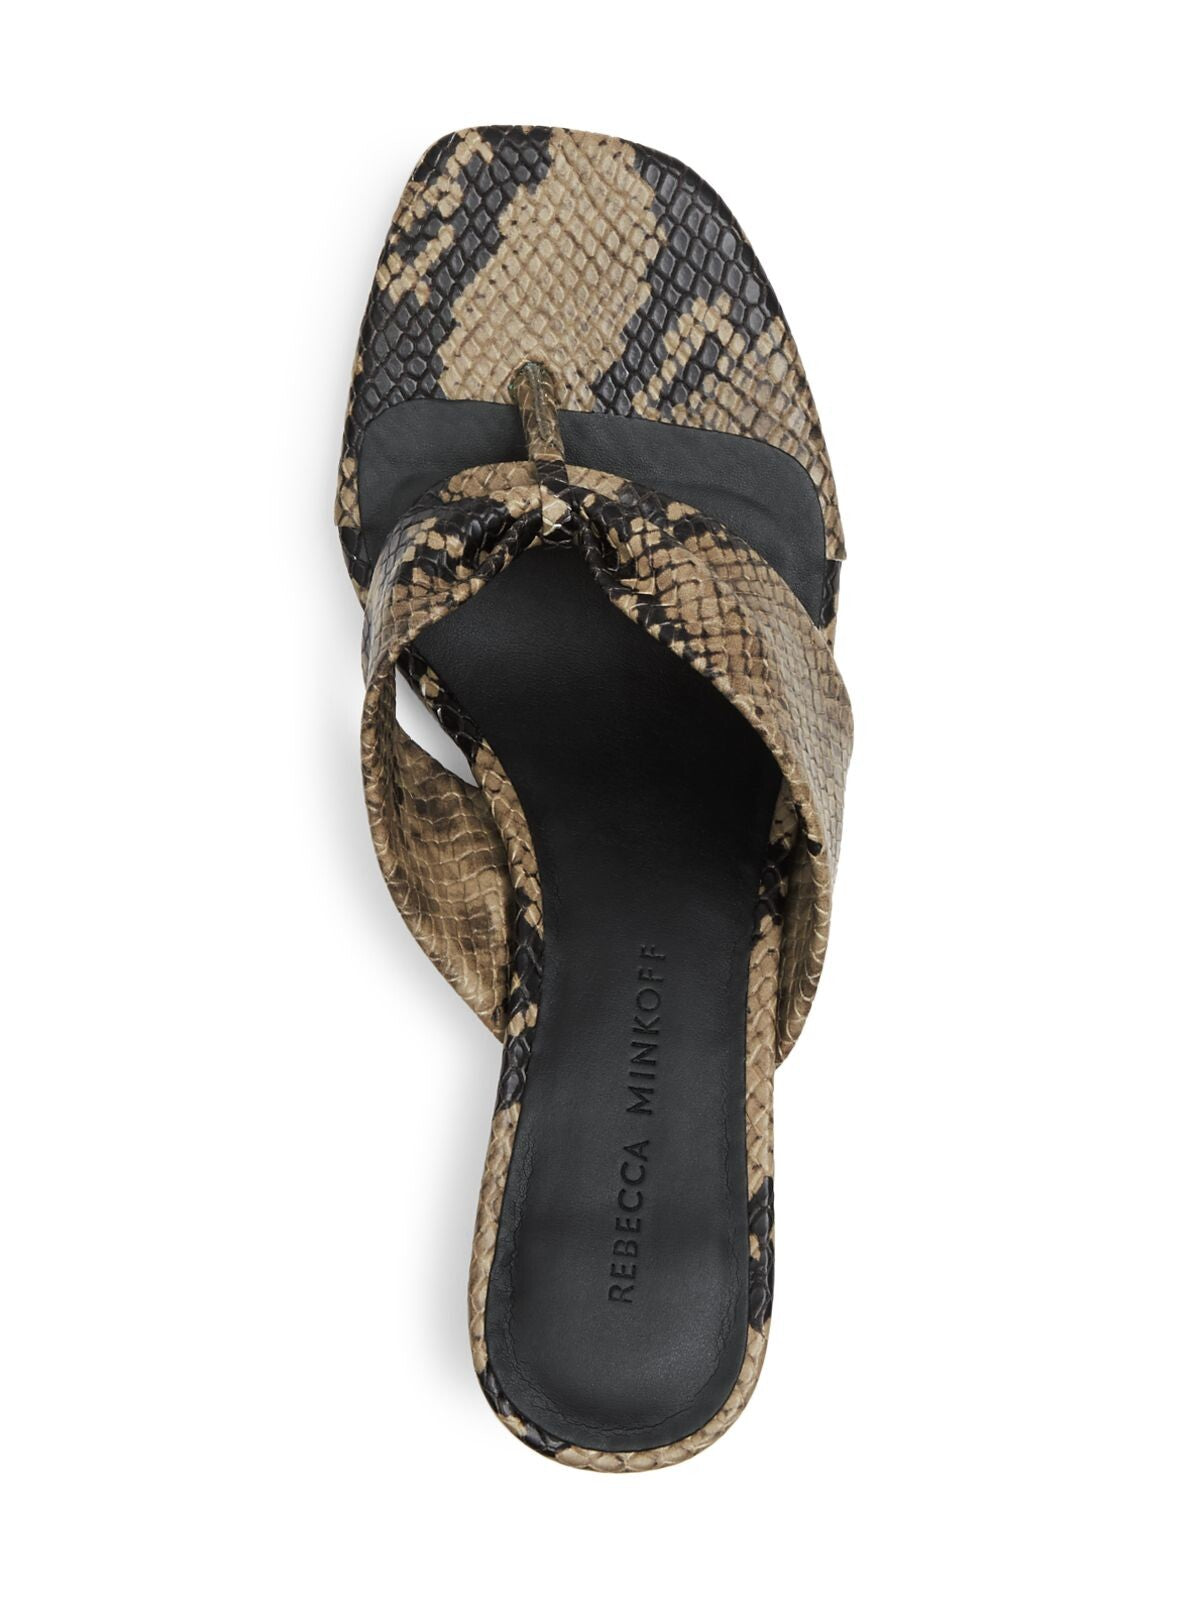 REBECCA MINKOFF Womens Sandrift Beige Snakeprint Padded Embellished Abrianna Open Toe Slip On Leather Dress Heeled Thong Sandals 5.5 M